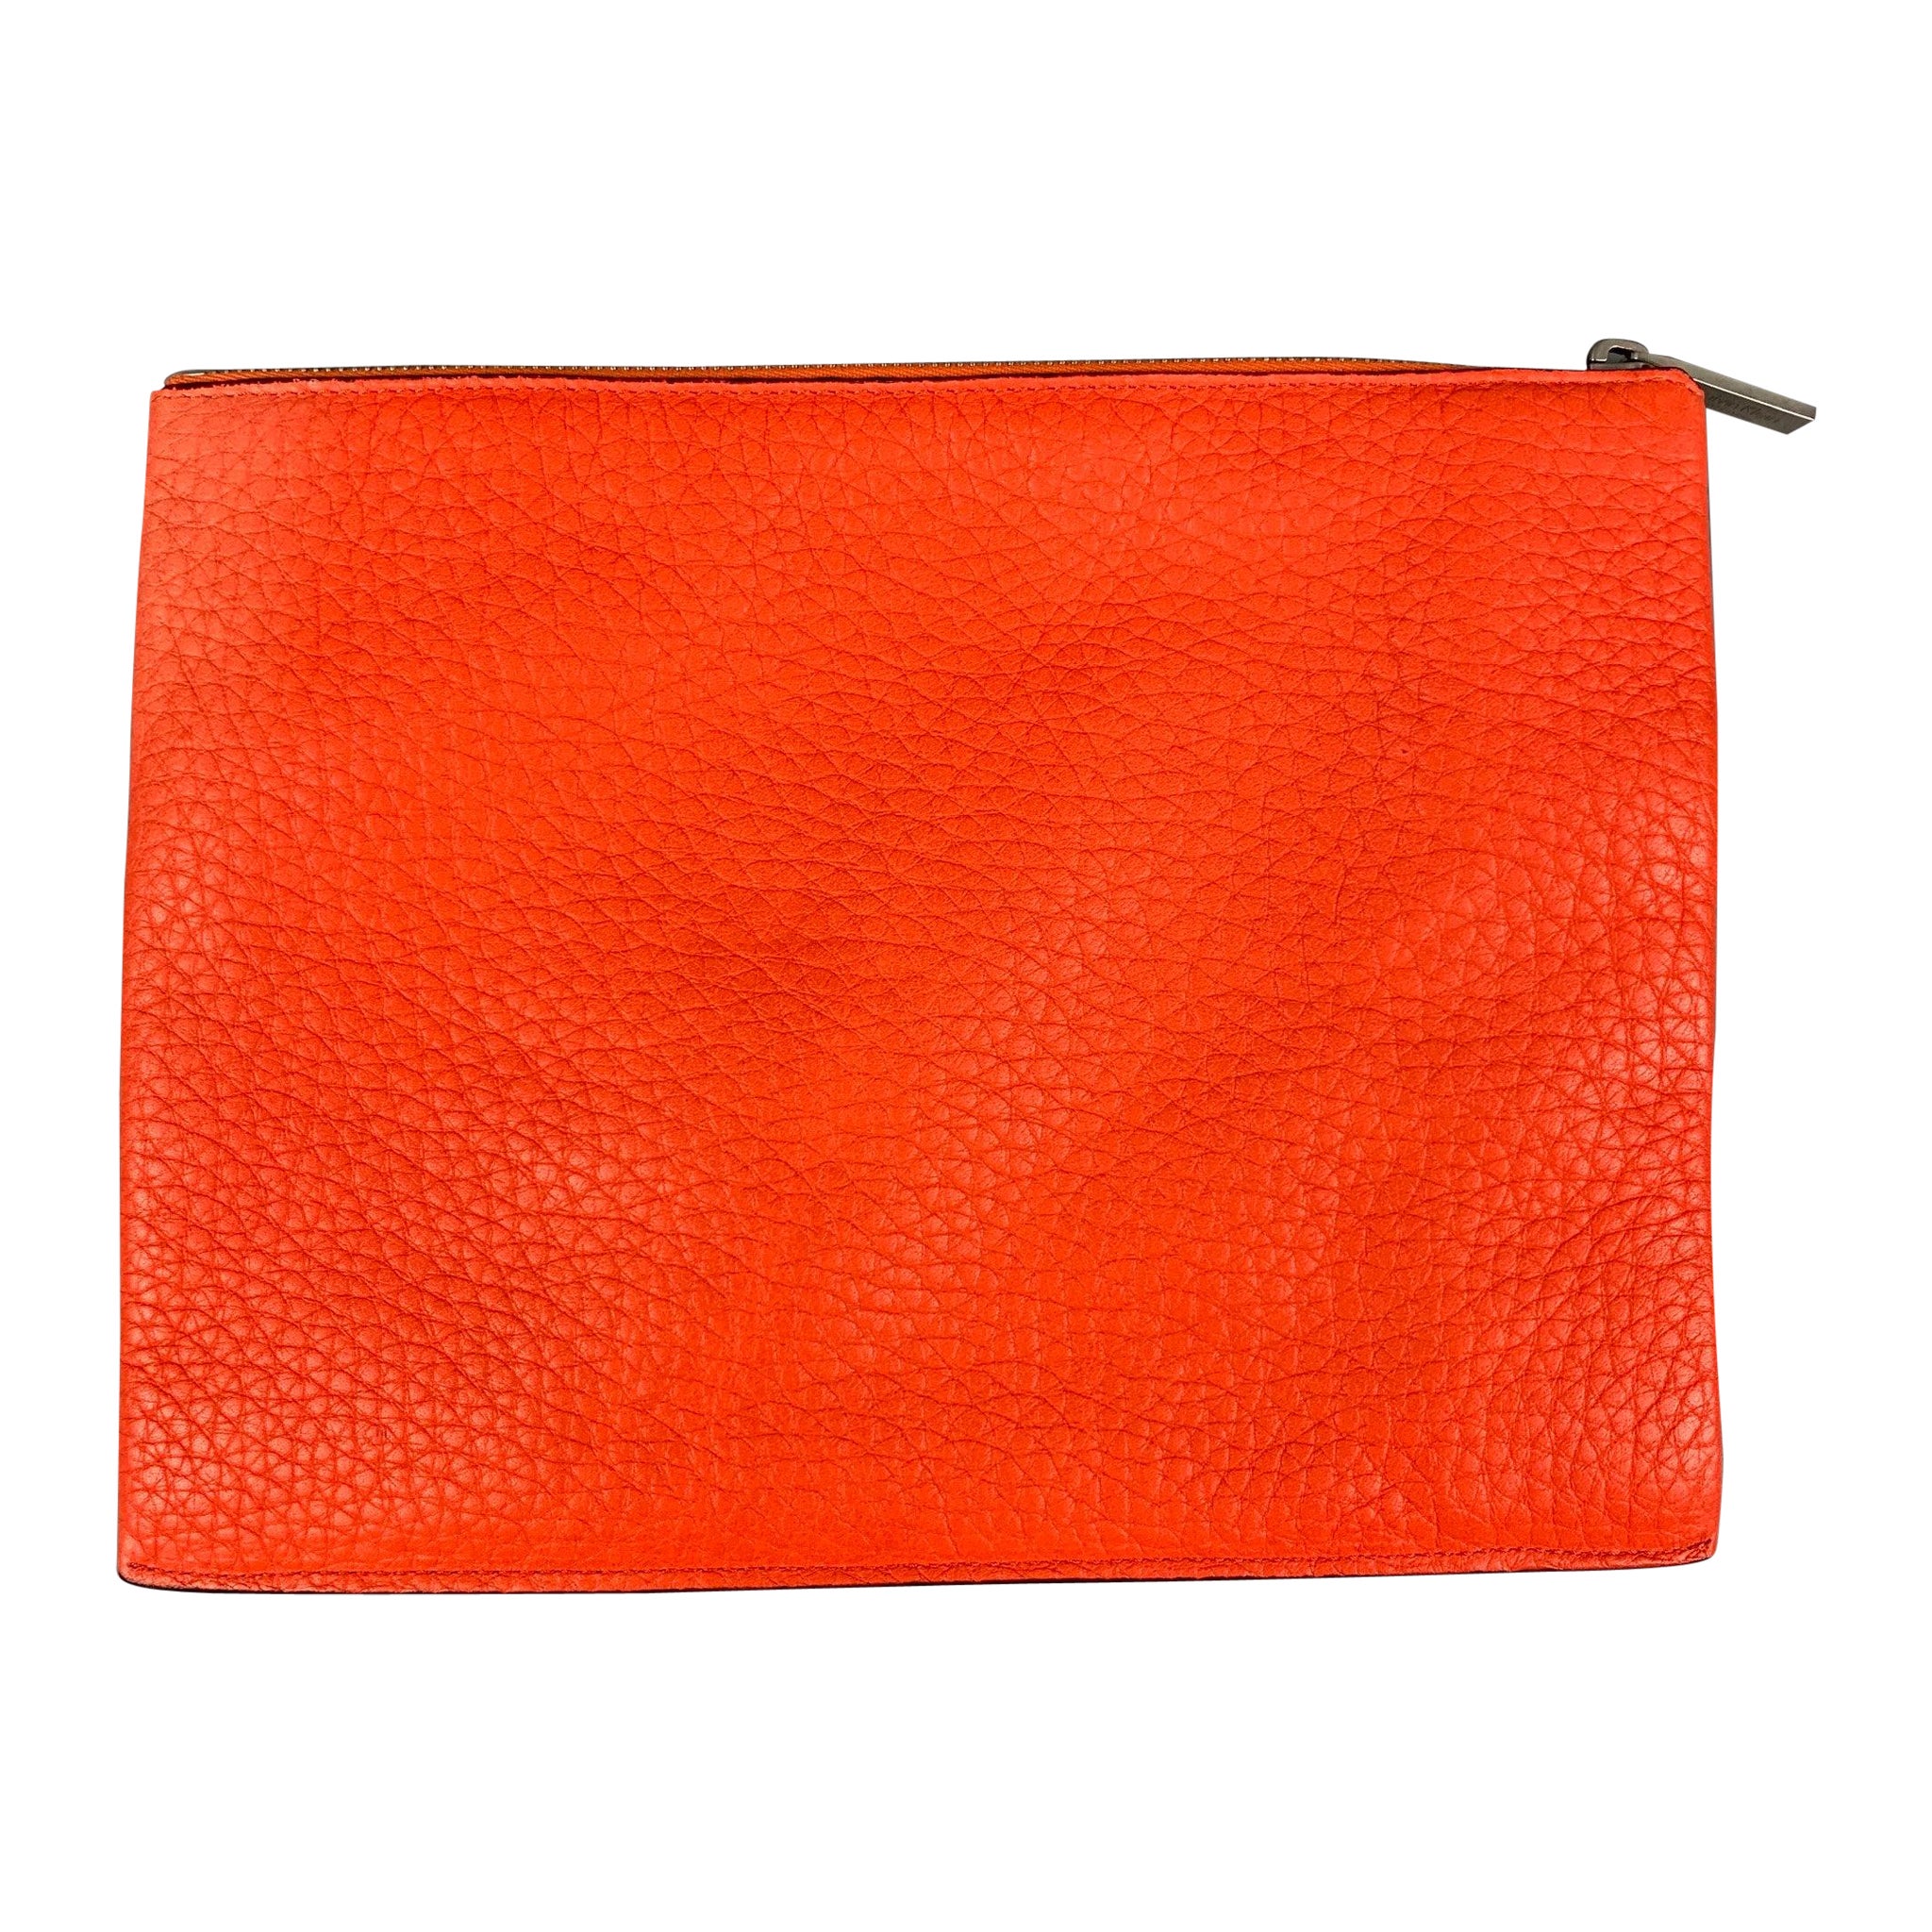 CALVIN KLEIN COLLECTION Orange Textured Leather Pouch Bag